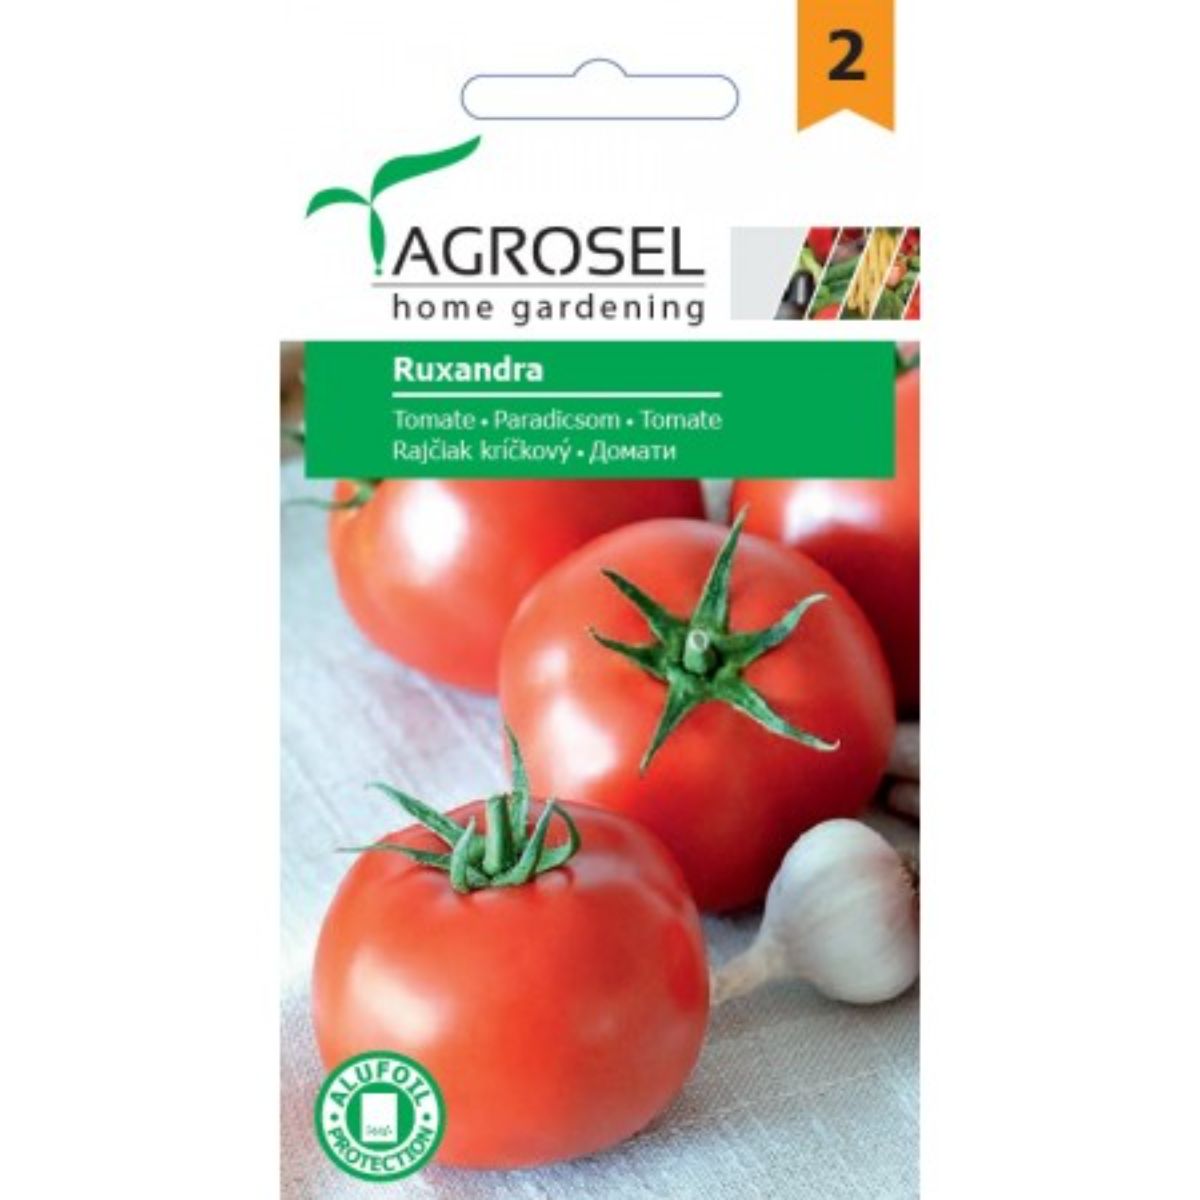 Tomate - Seminte Tomate Ruxandra Agrosel 0.75 g, hectarul.ro